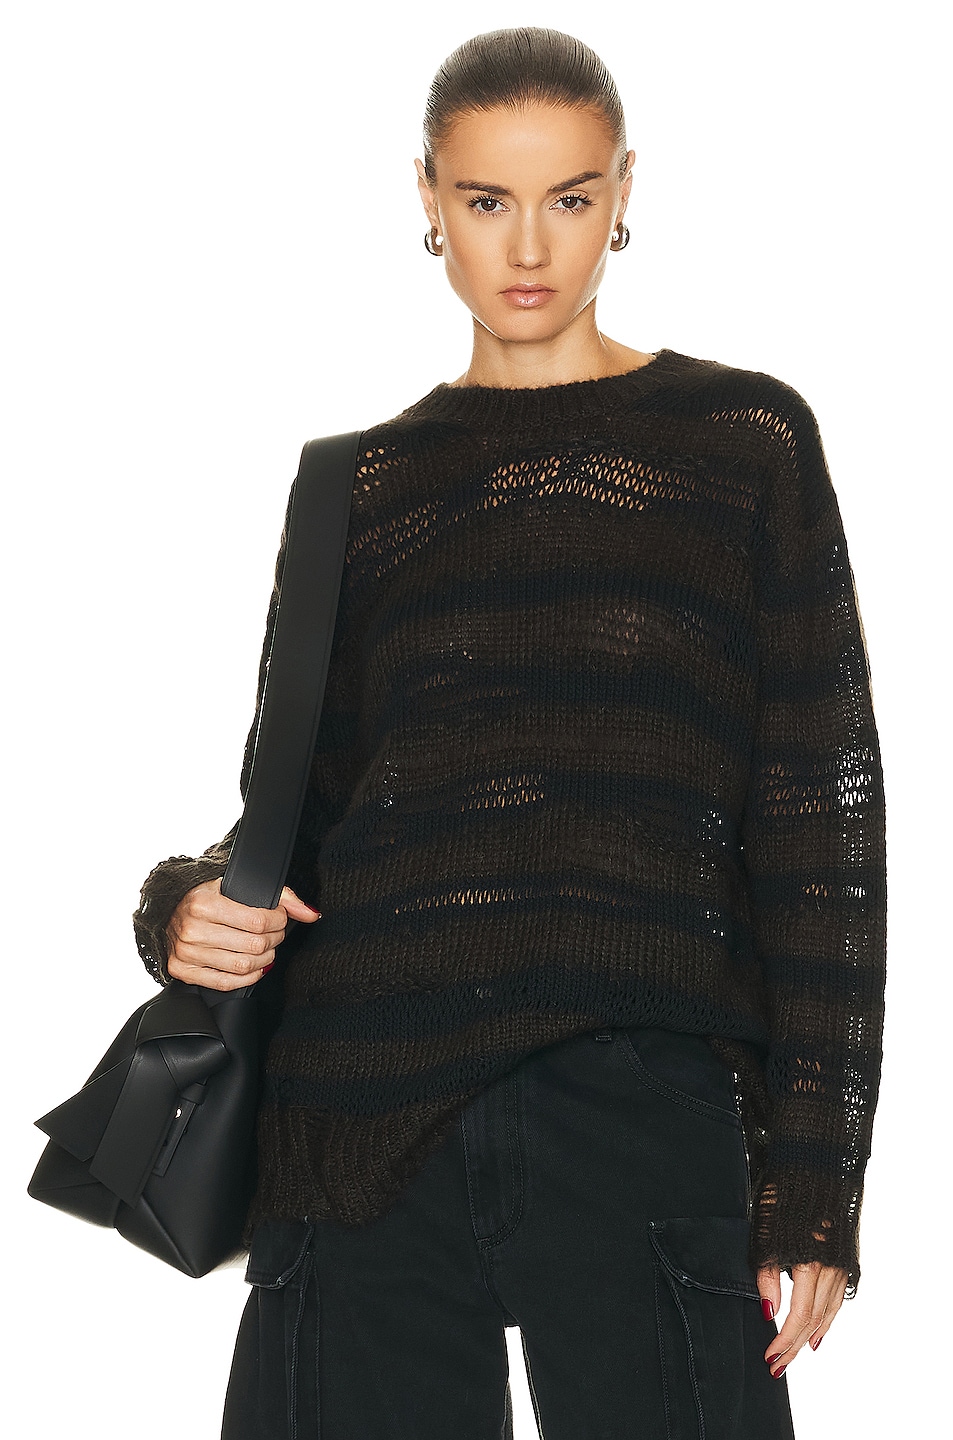 Acne Studios Distressed Sweater in Warm Charcoal Grey & Black | FWRD